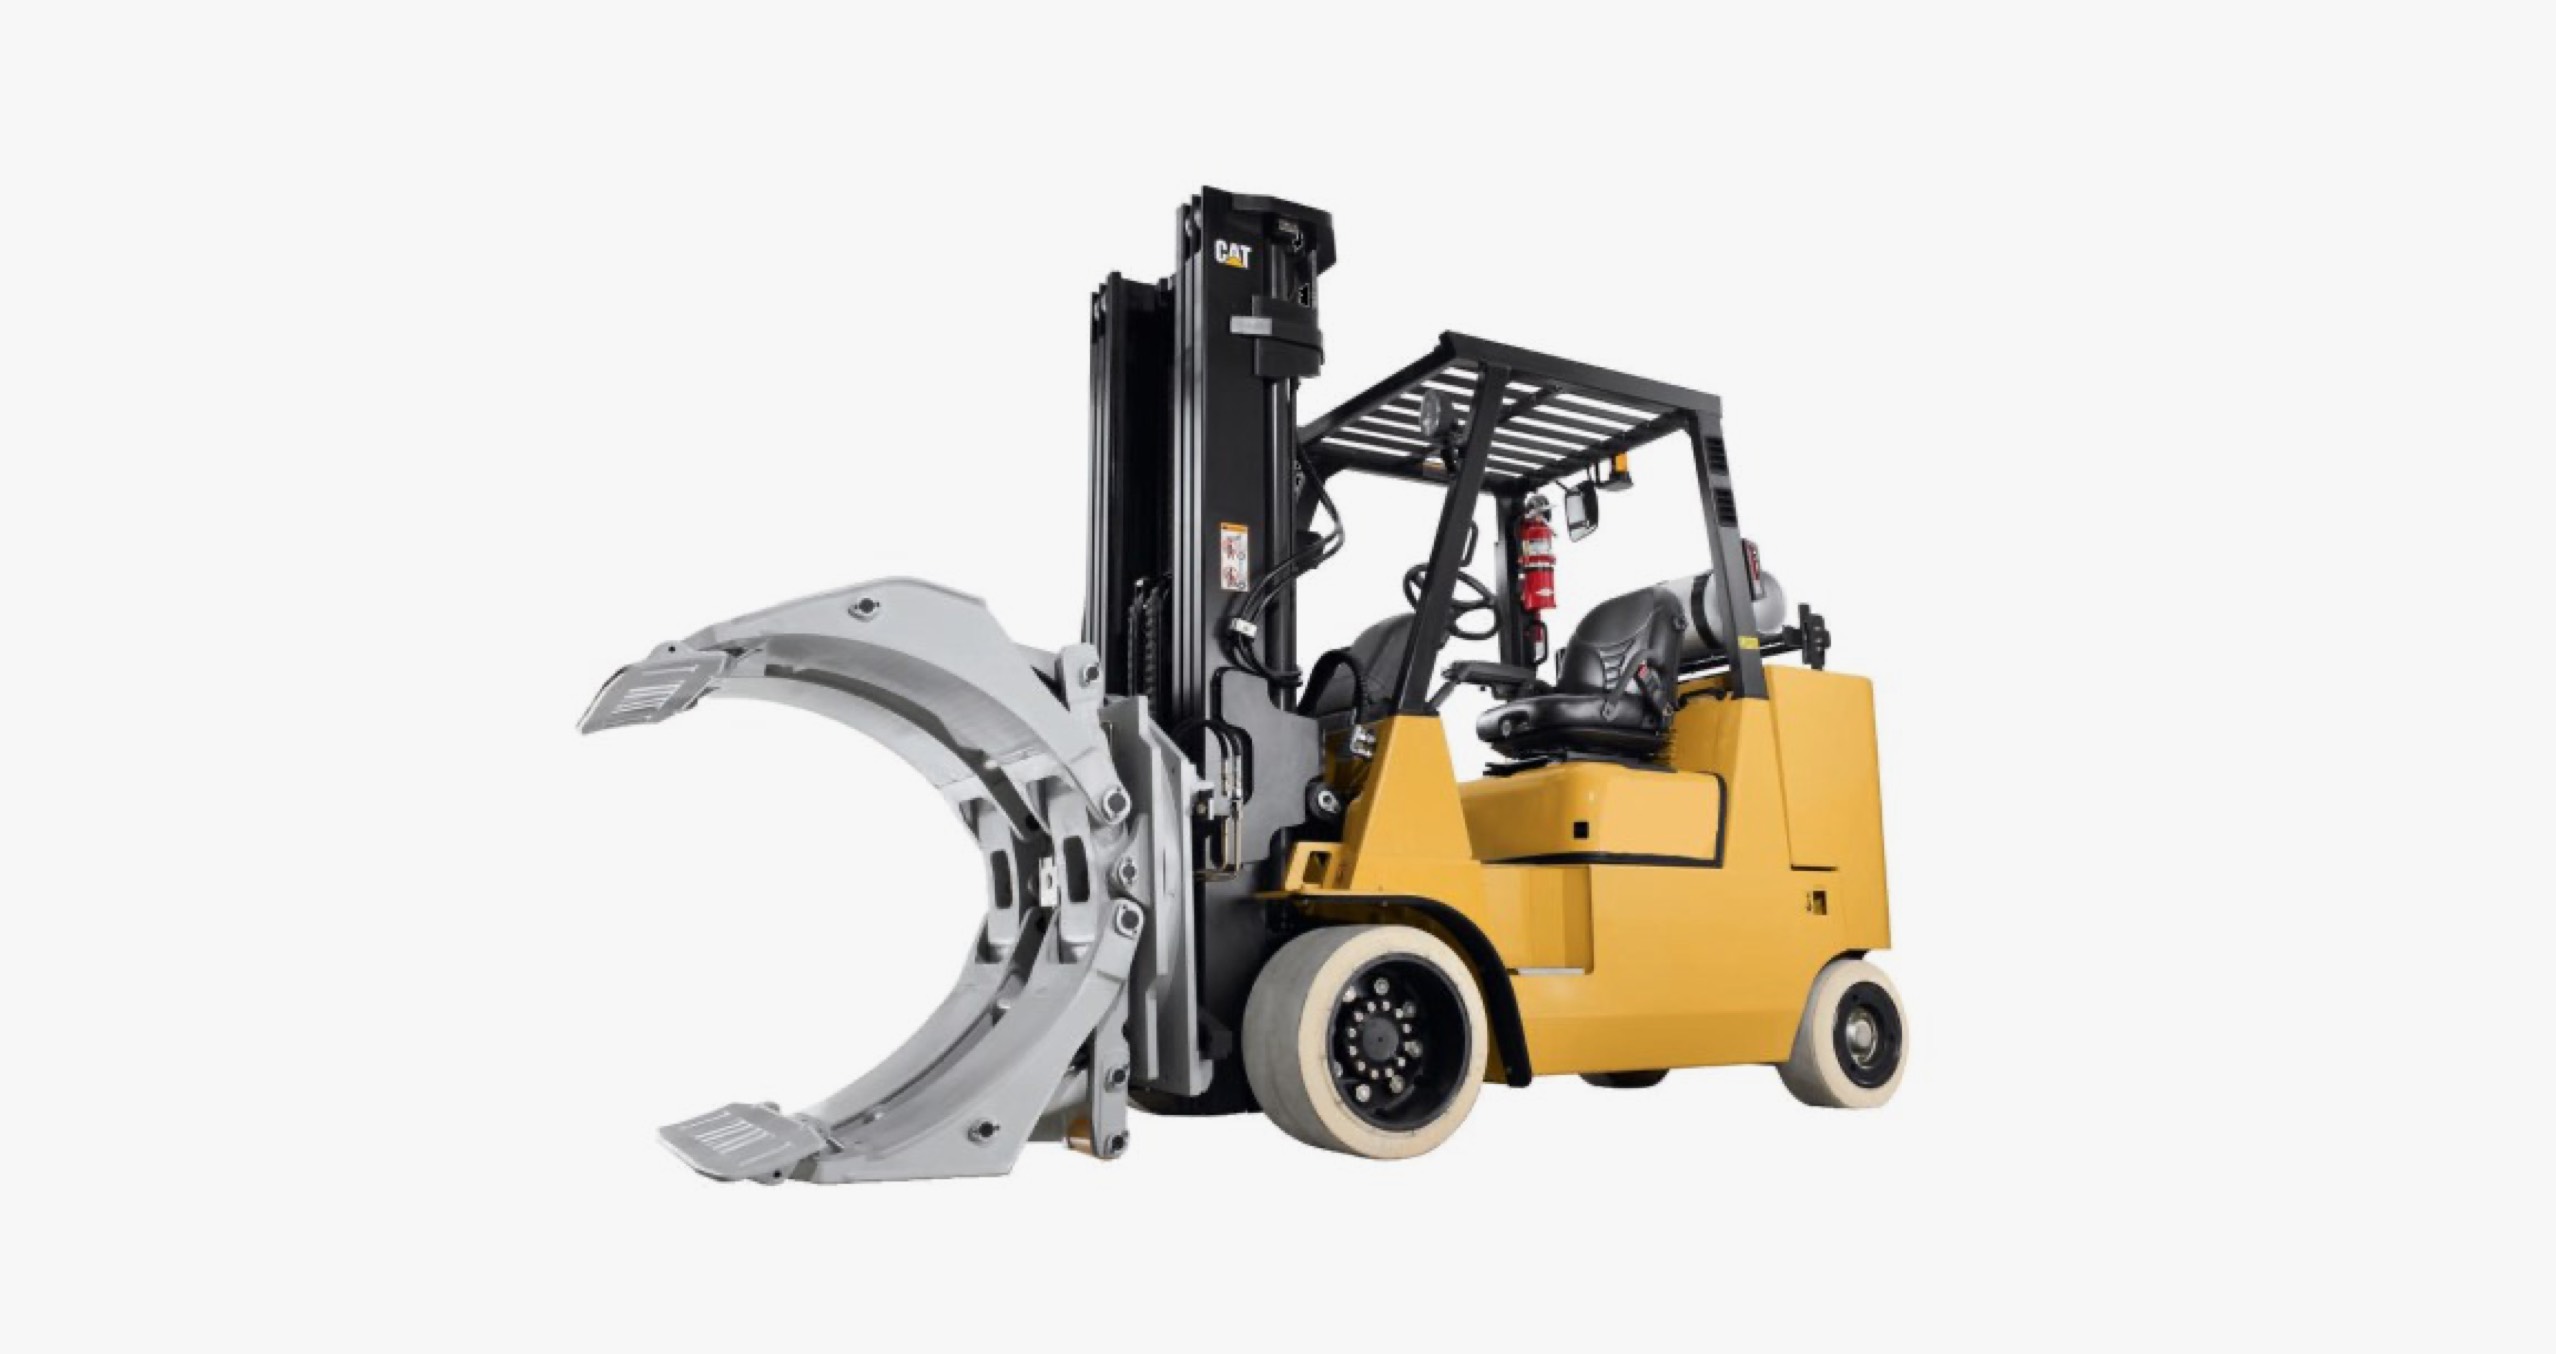 Forklift Attachment Sales 3@2x 2